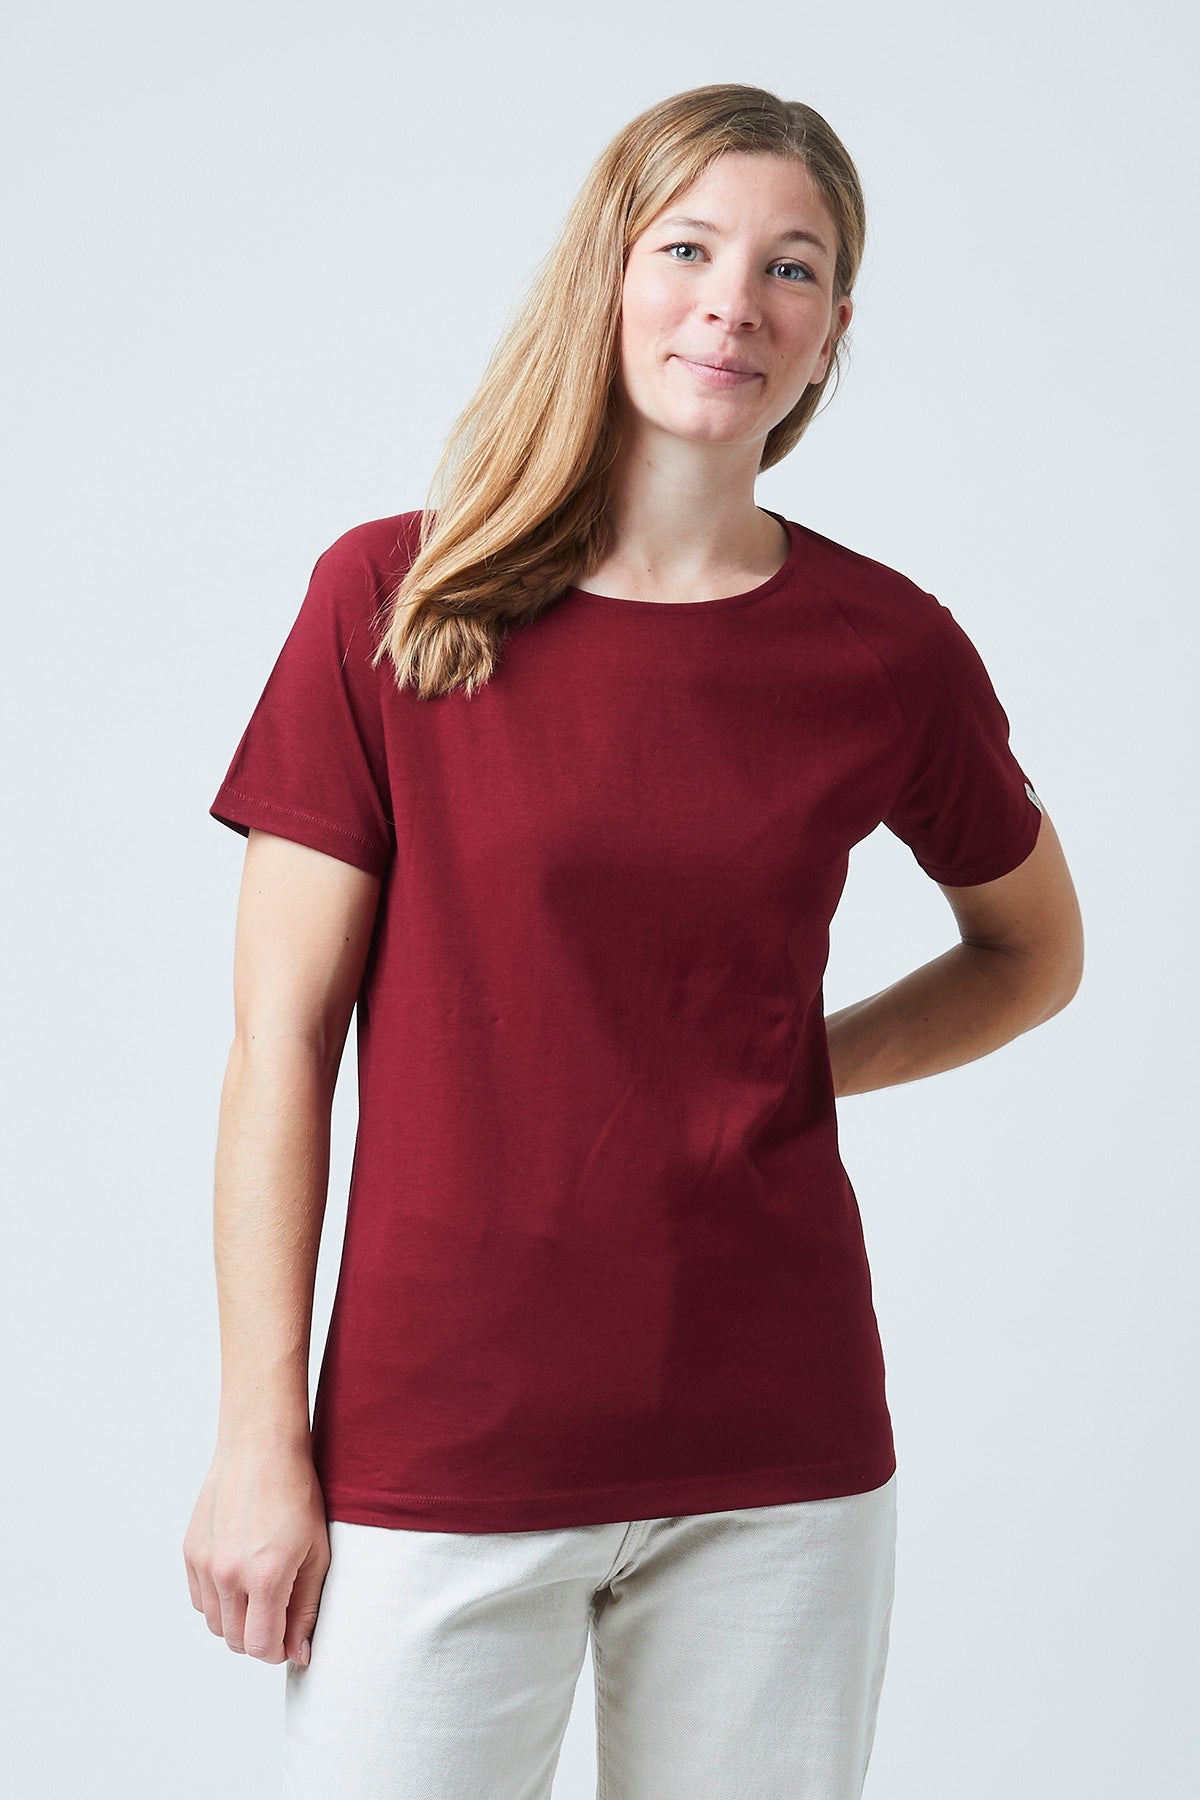 ZRCL Damen-T-Shirt aus Biobaumwolle (Basic T-Shirt)